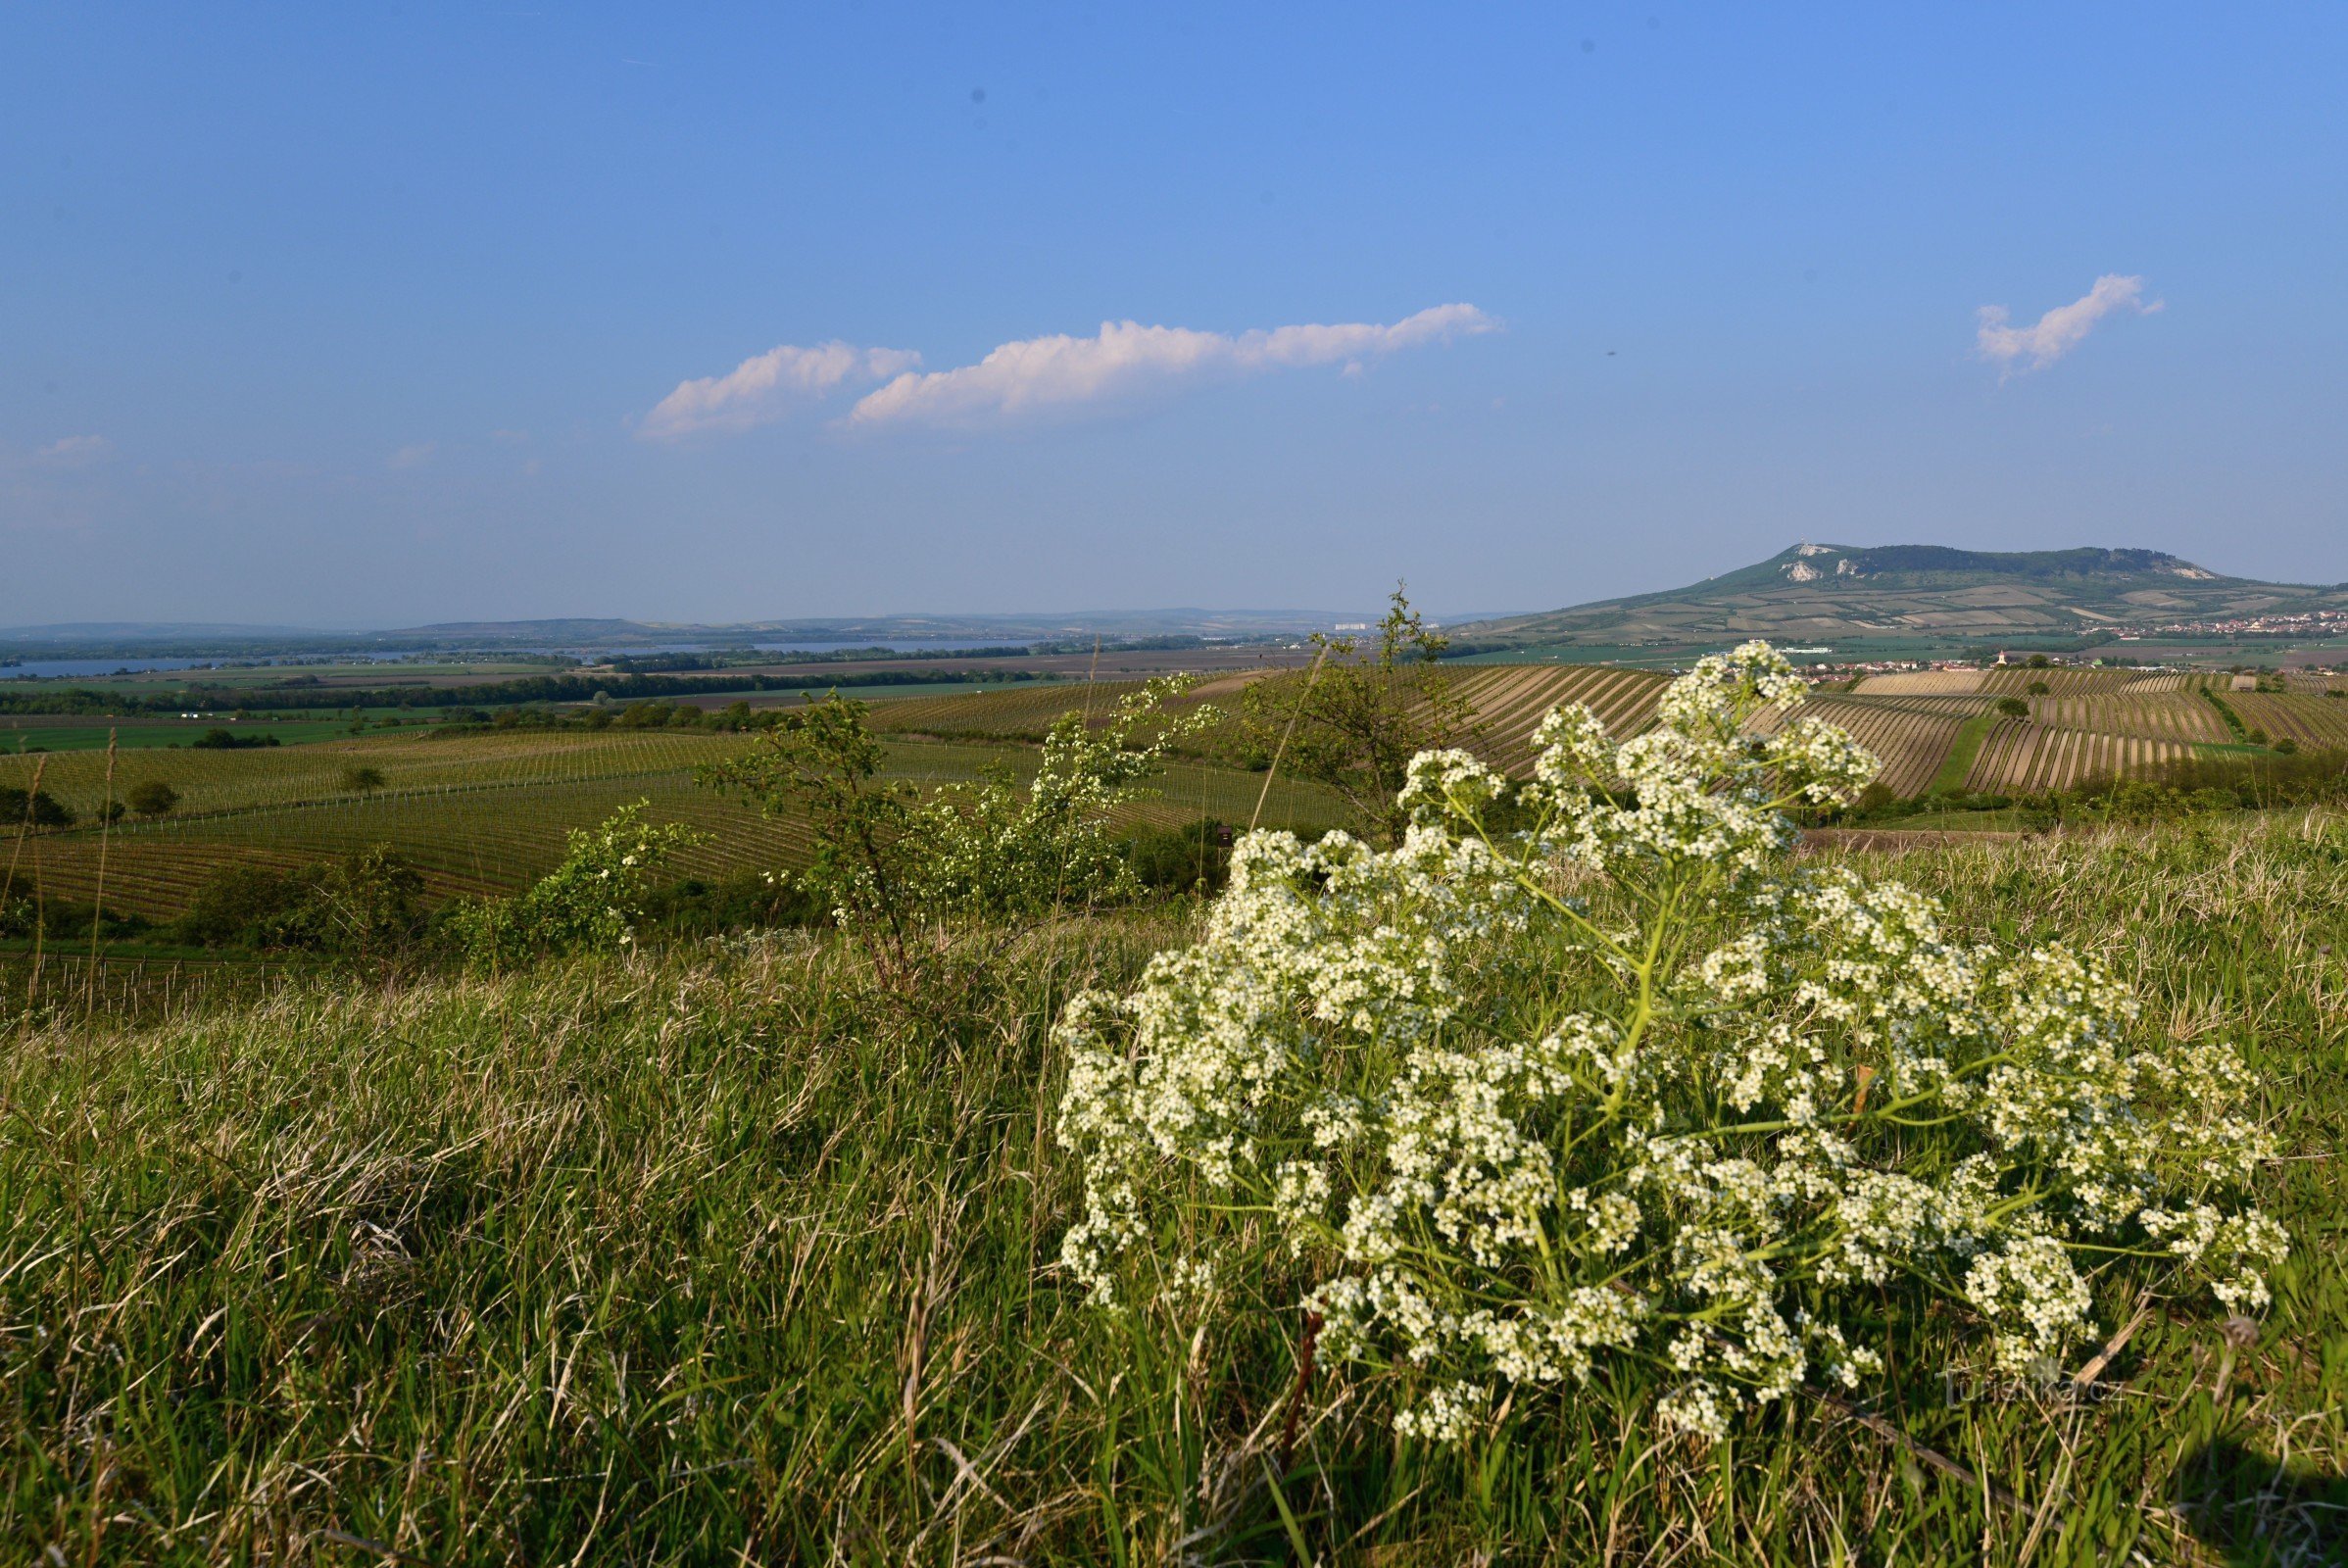 Dunajovické hills: Tartar tartar is blooming